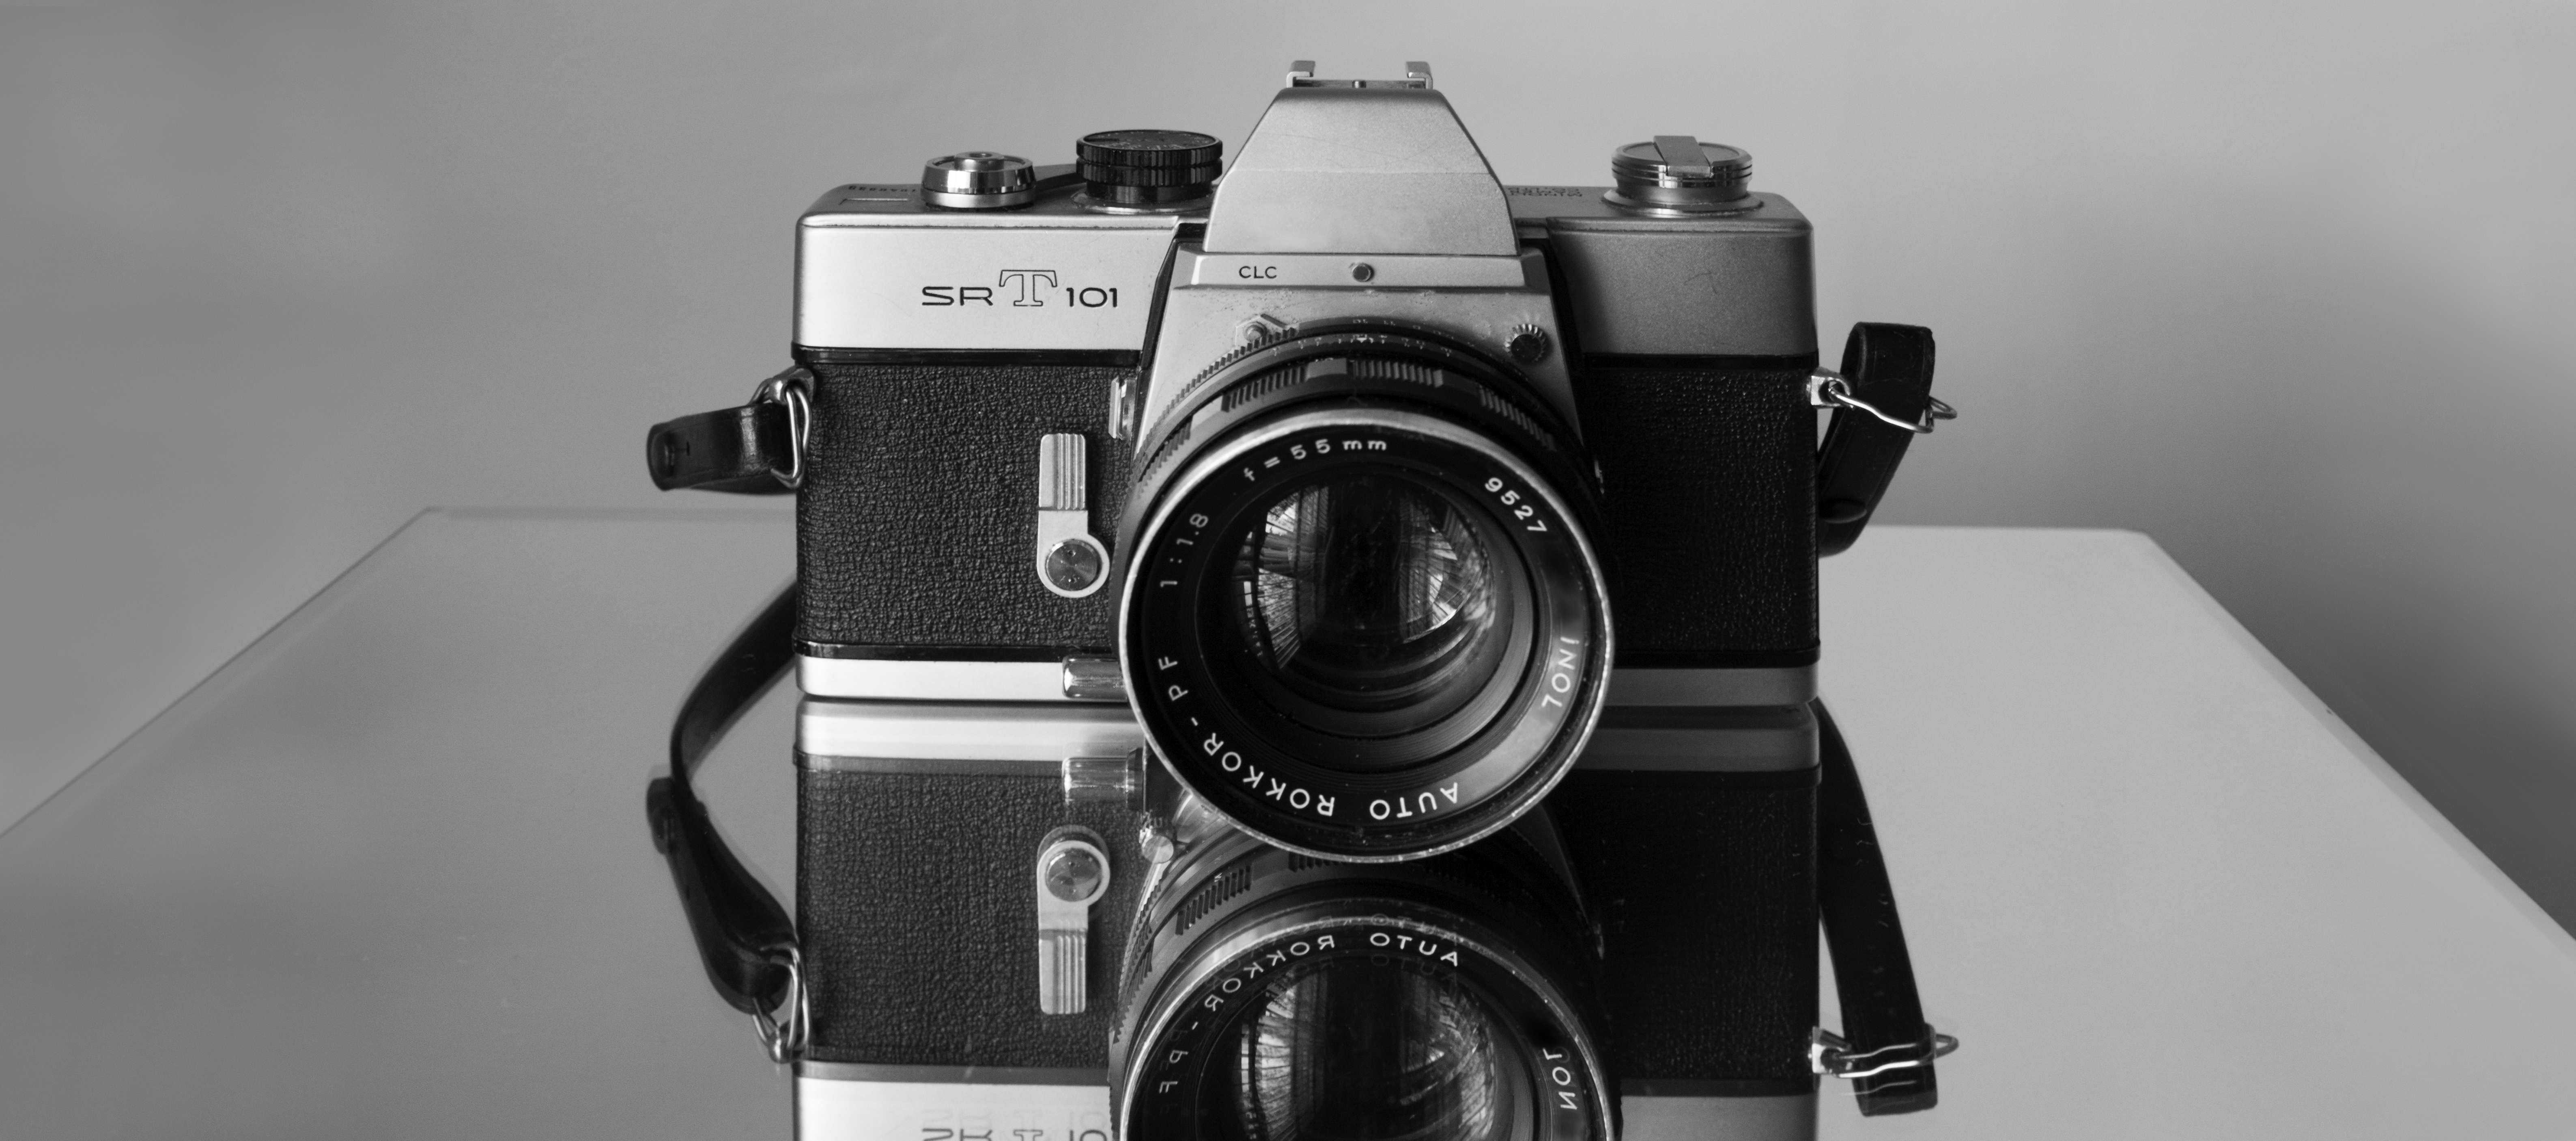 Photograph of vintage manual camera